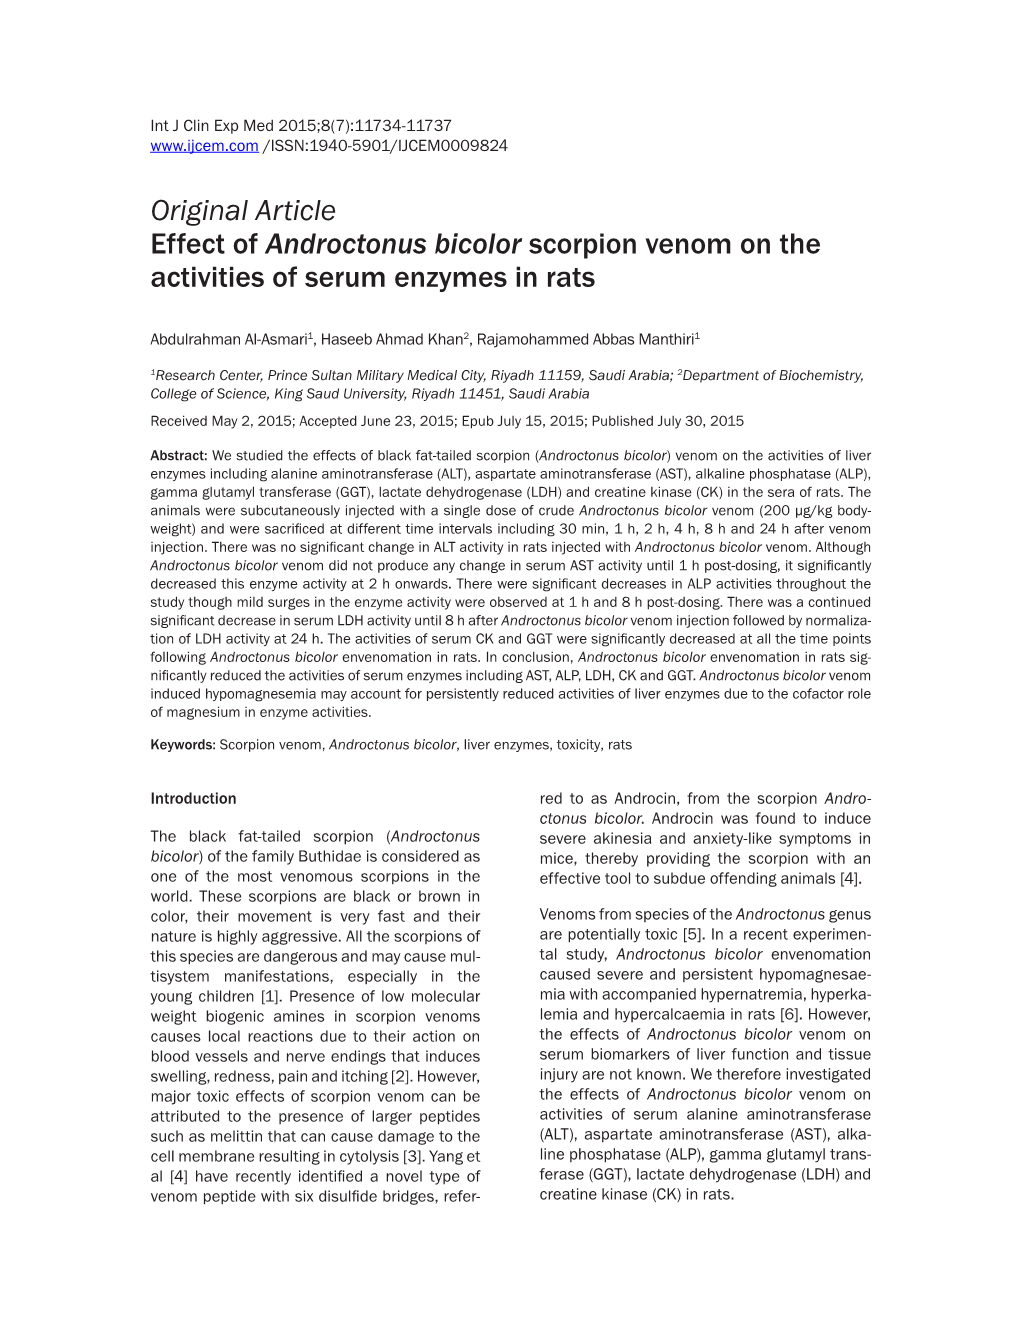 Original Article Effect of Androctonus Bicolor Scorpion Venom on the Activities of Serum Enzymes in Rats